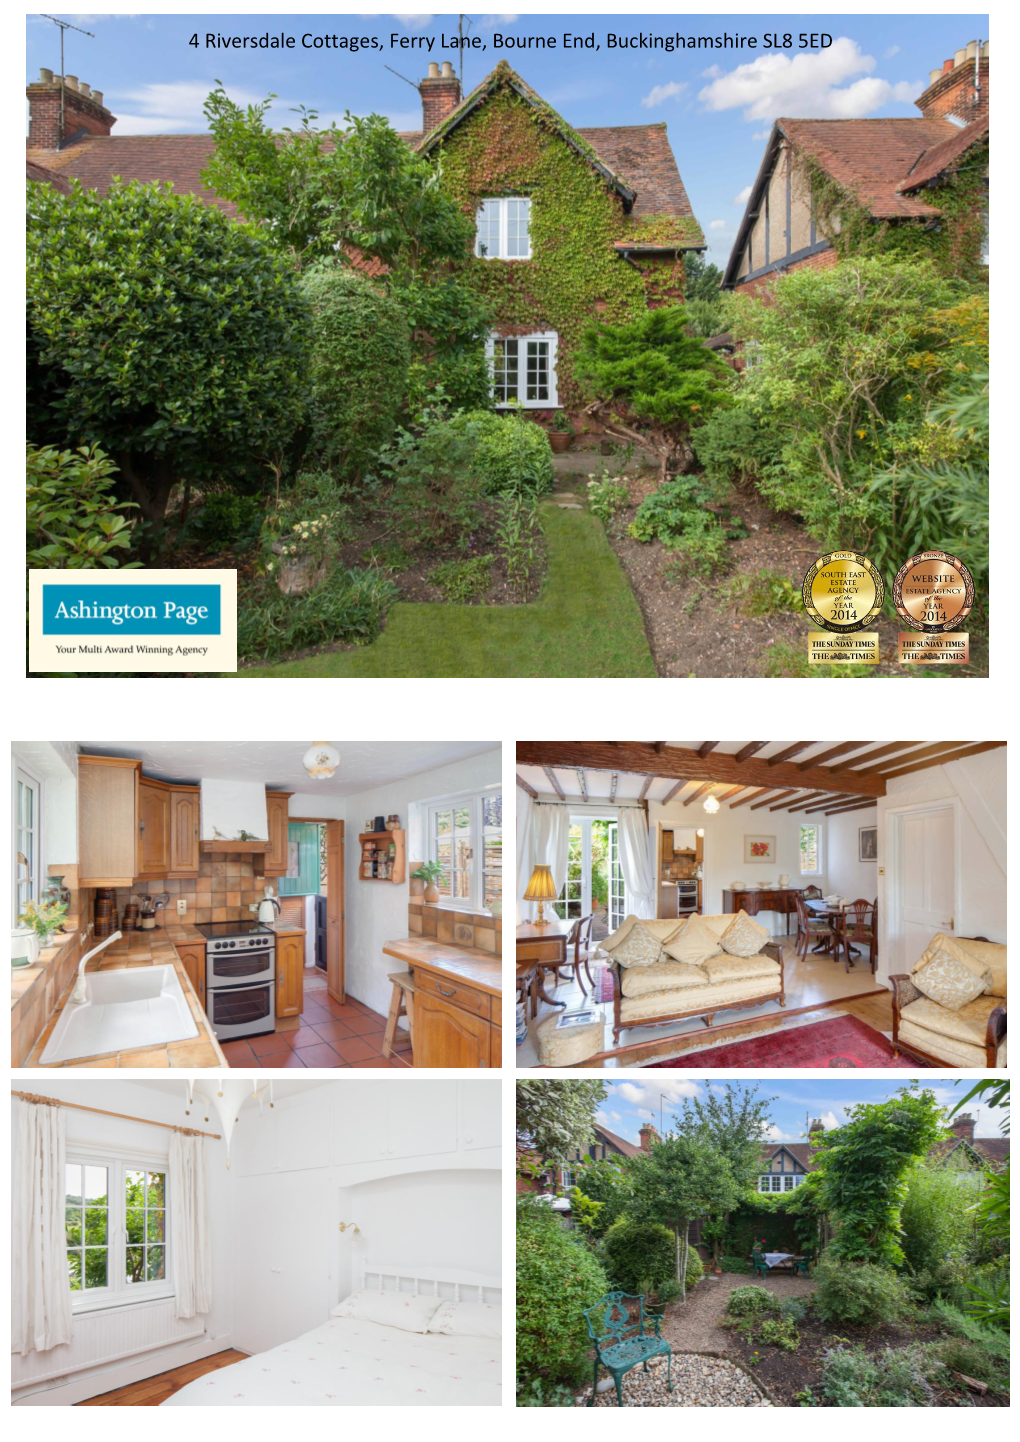 4 Riversdale Cottages, Ferry Lane, Bourne End, Buckinghamshire SL8 5ED